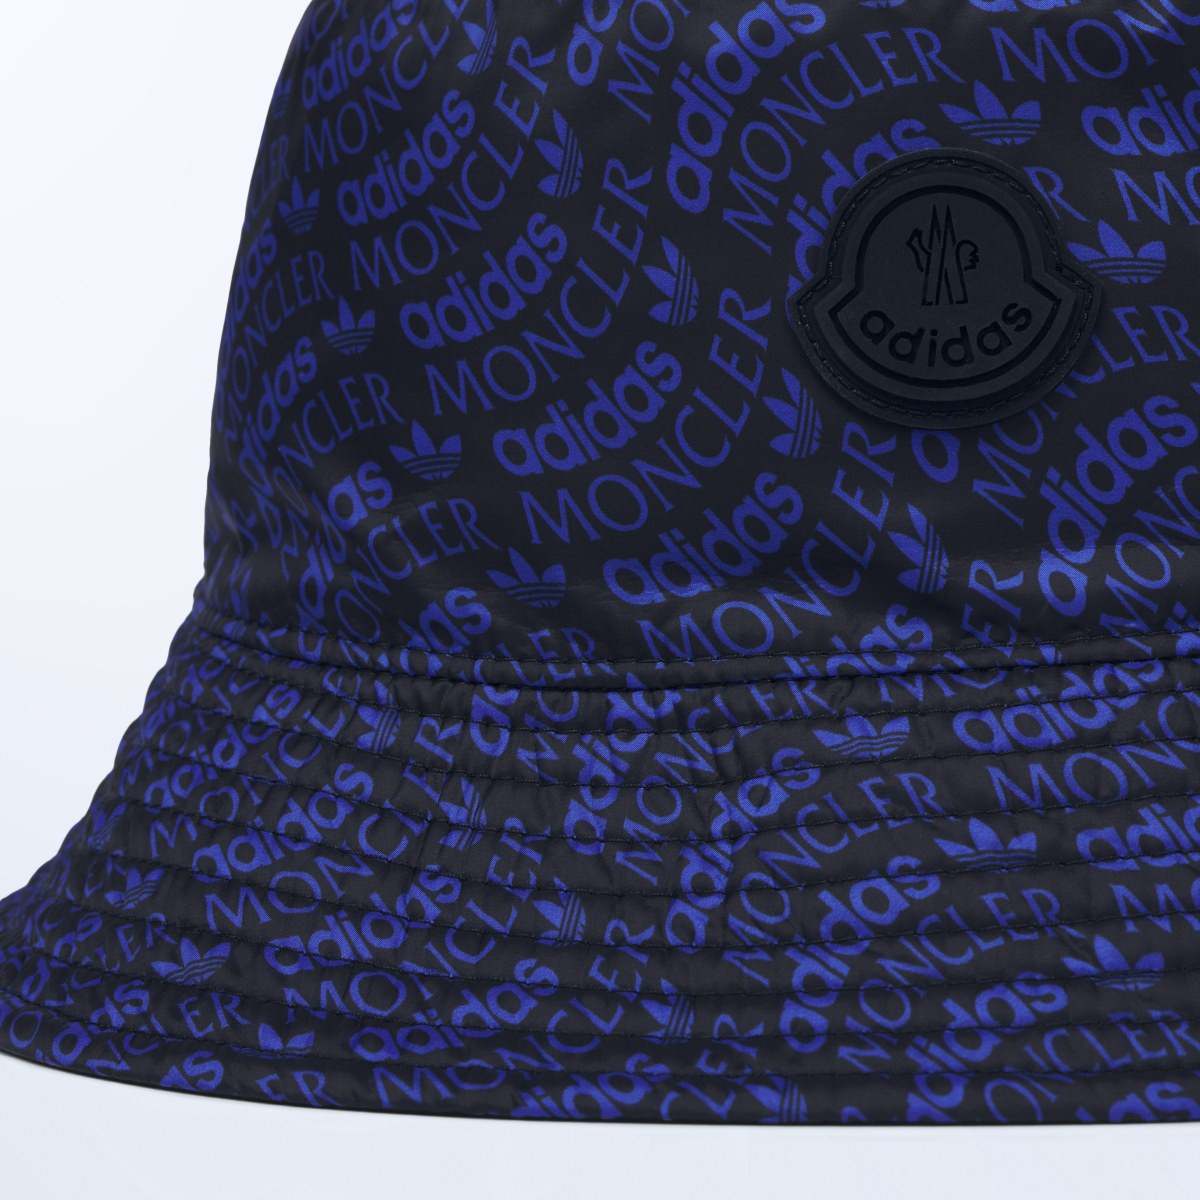 Adidas Moncler x adidas Originals Reversible Bucket Hat. 5